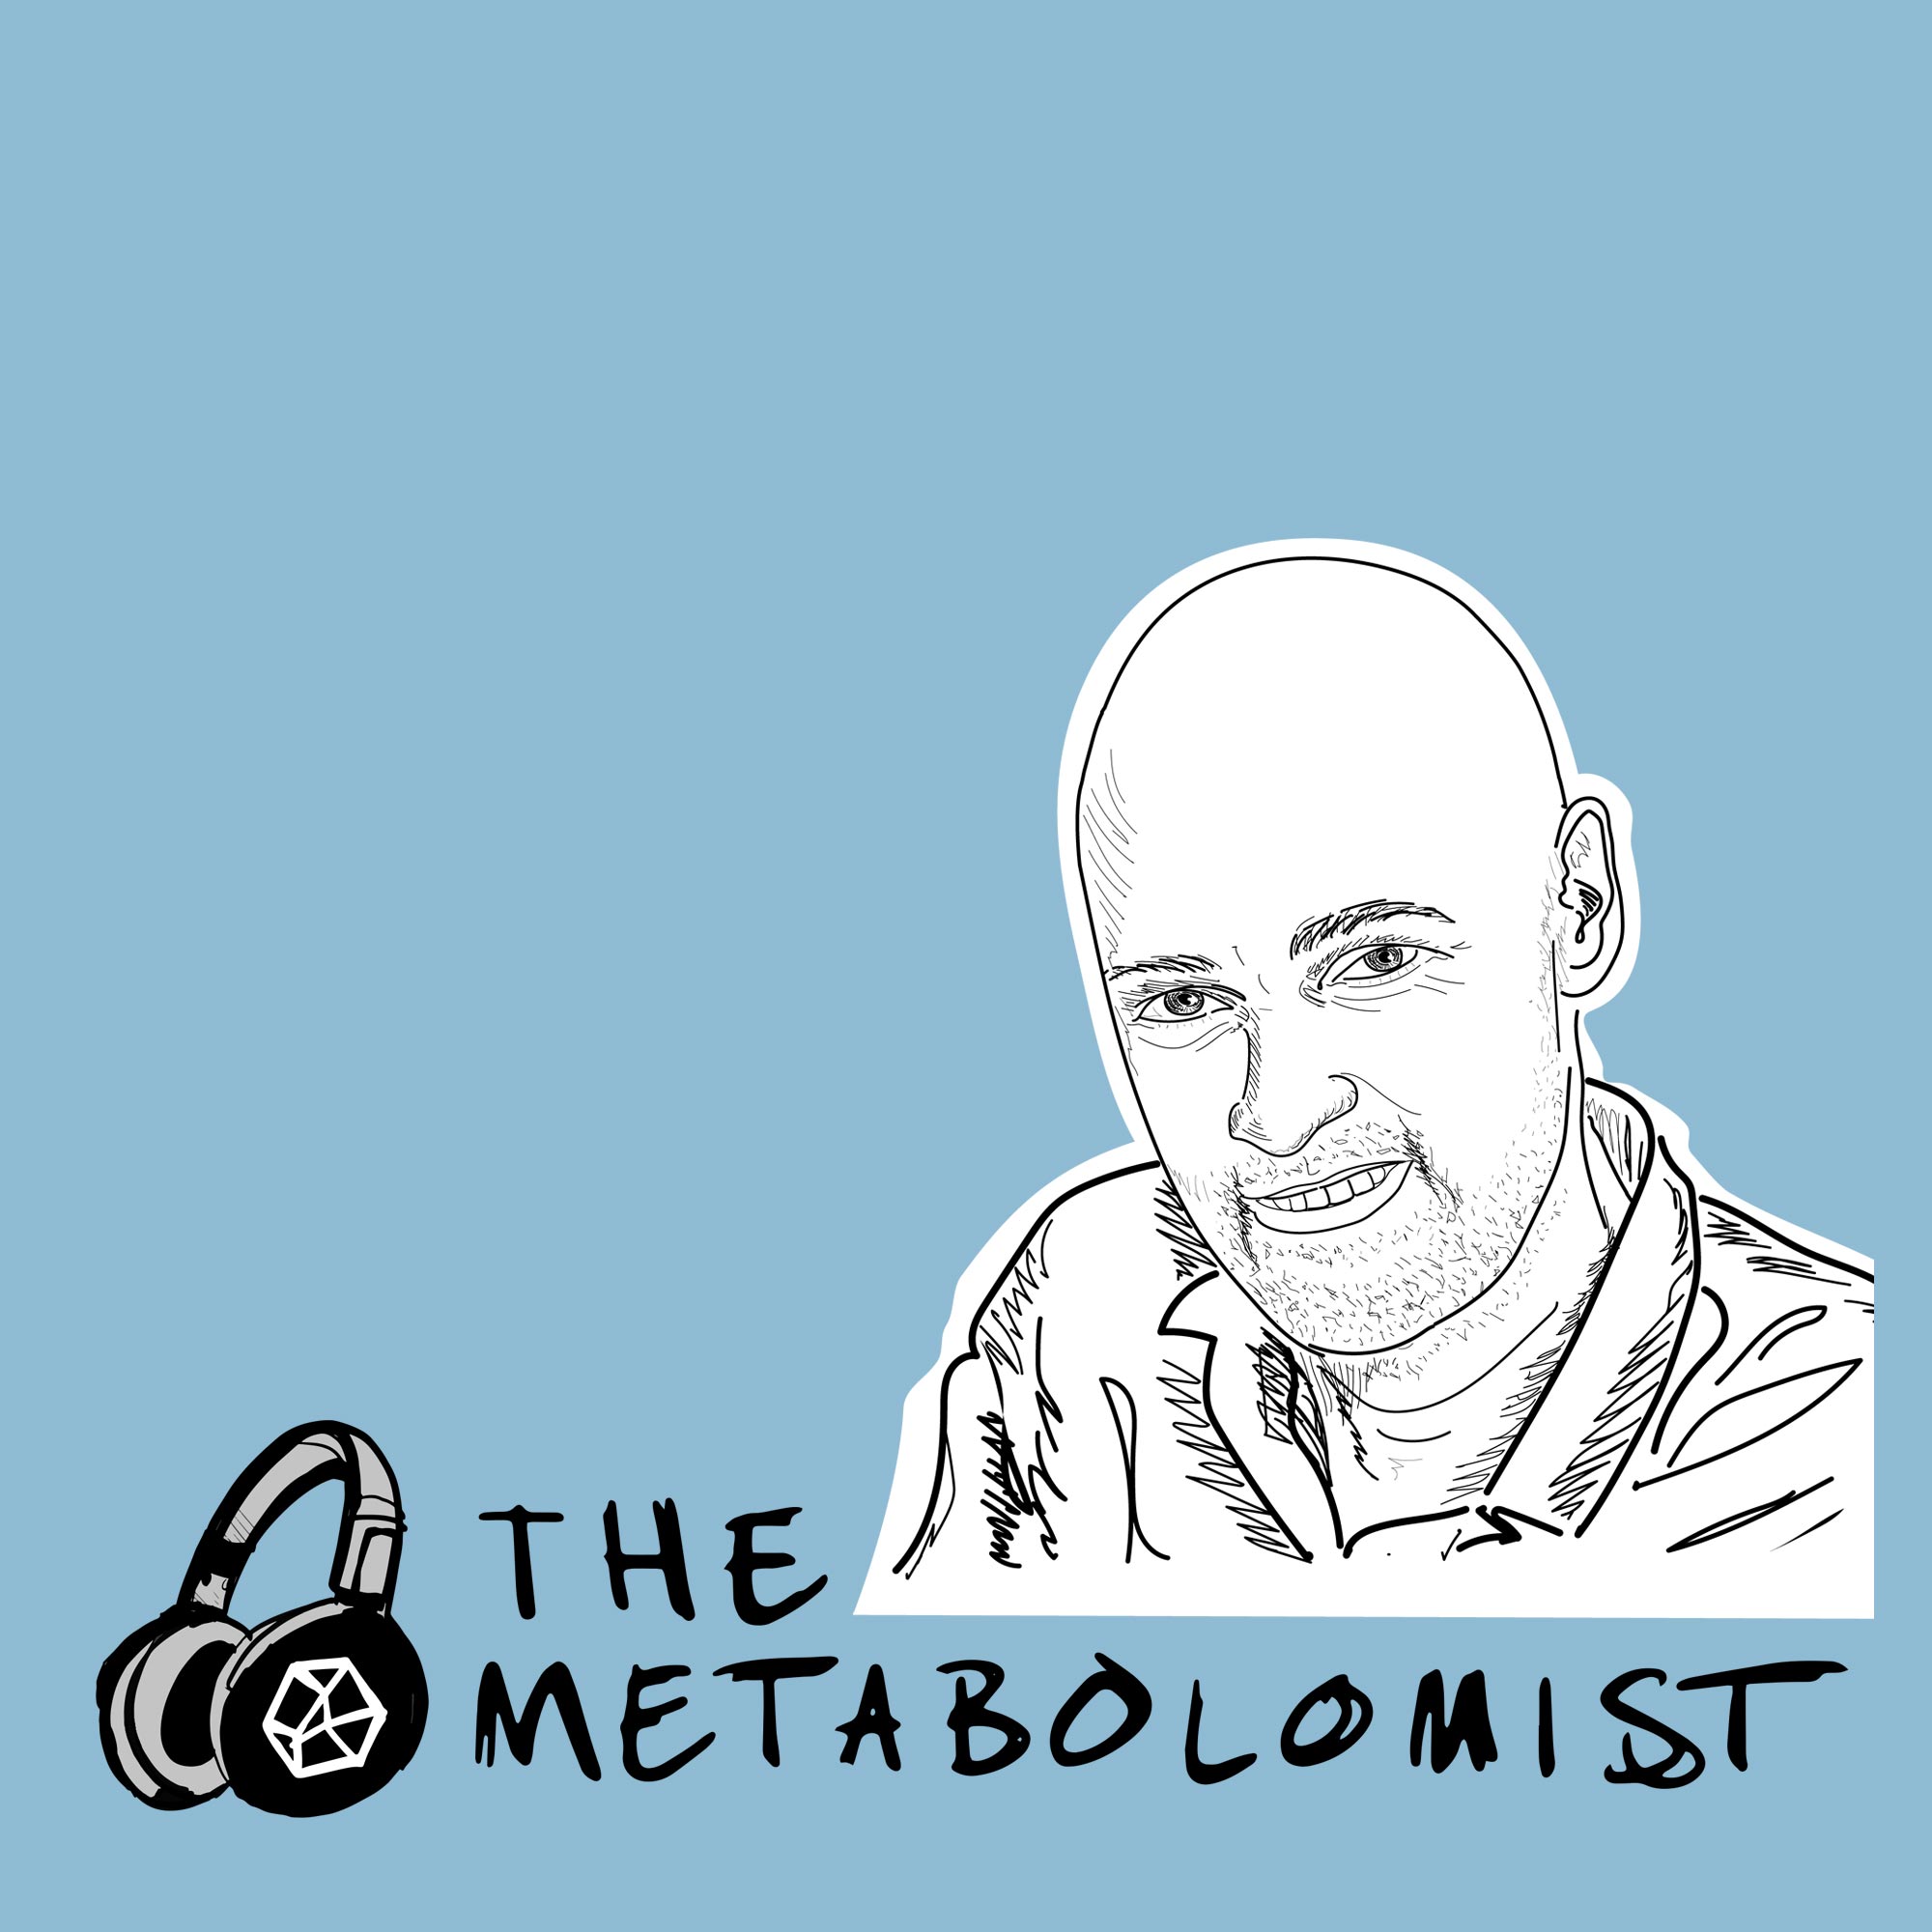 The Metabolomist - Karsten Suhre